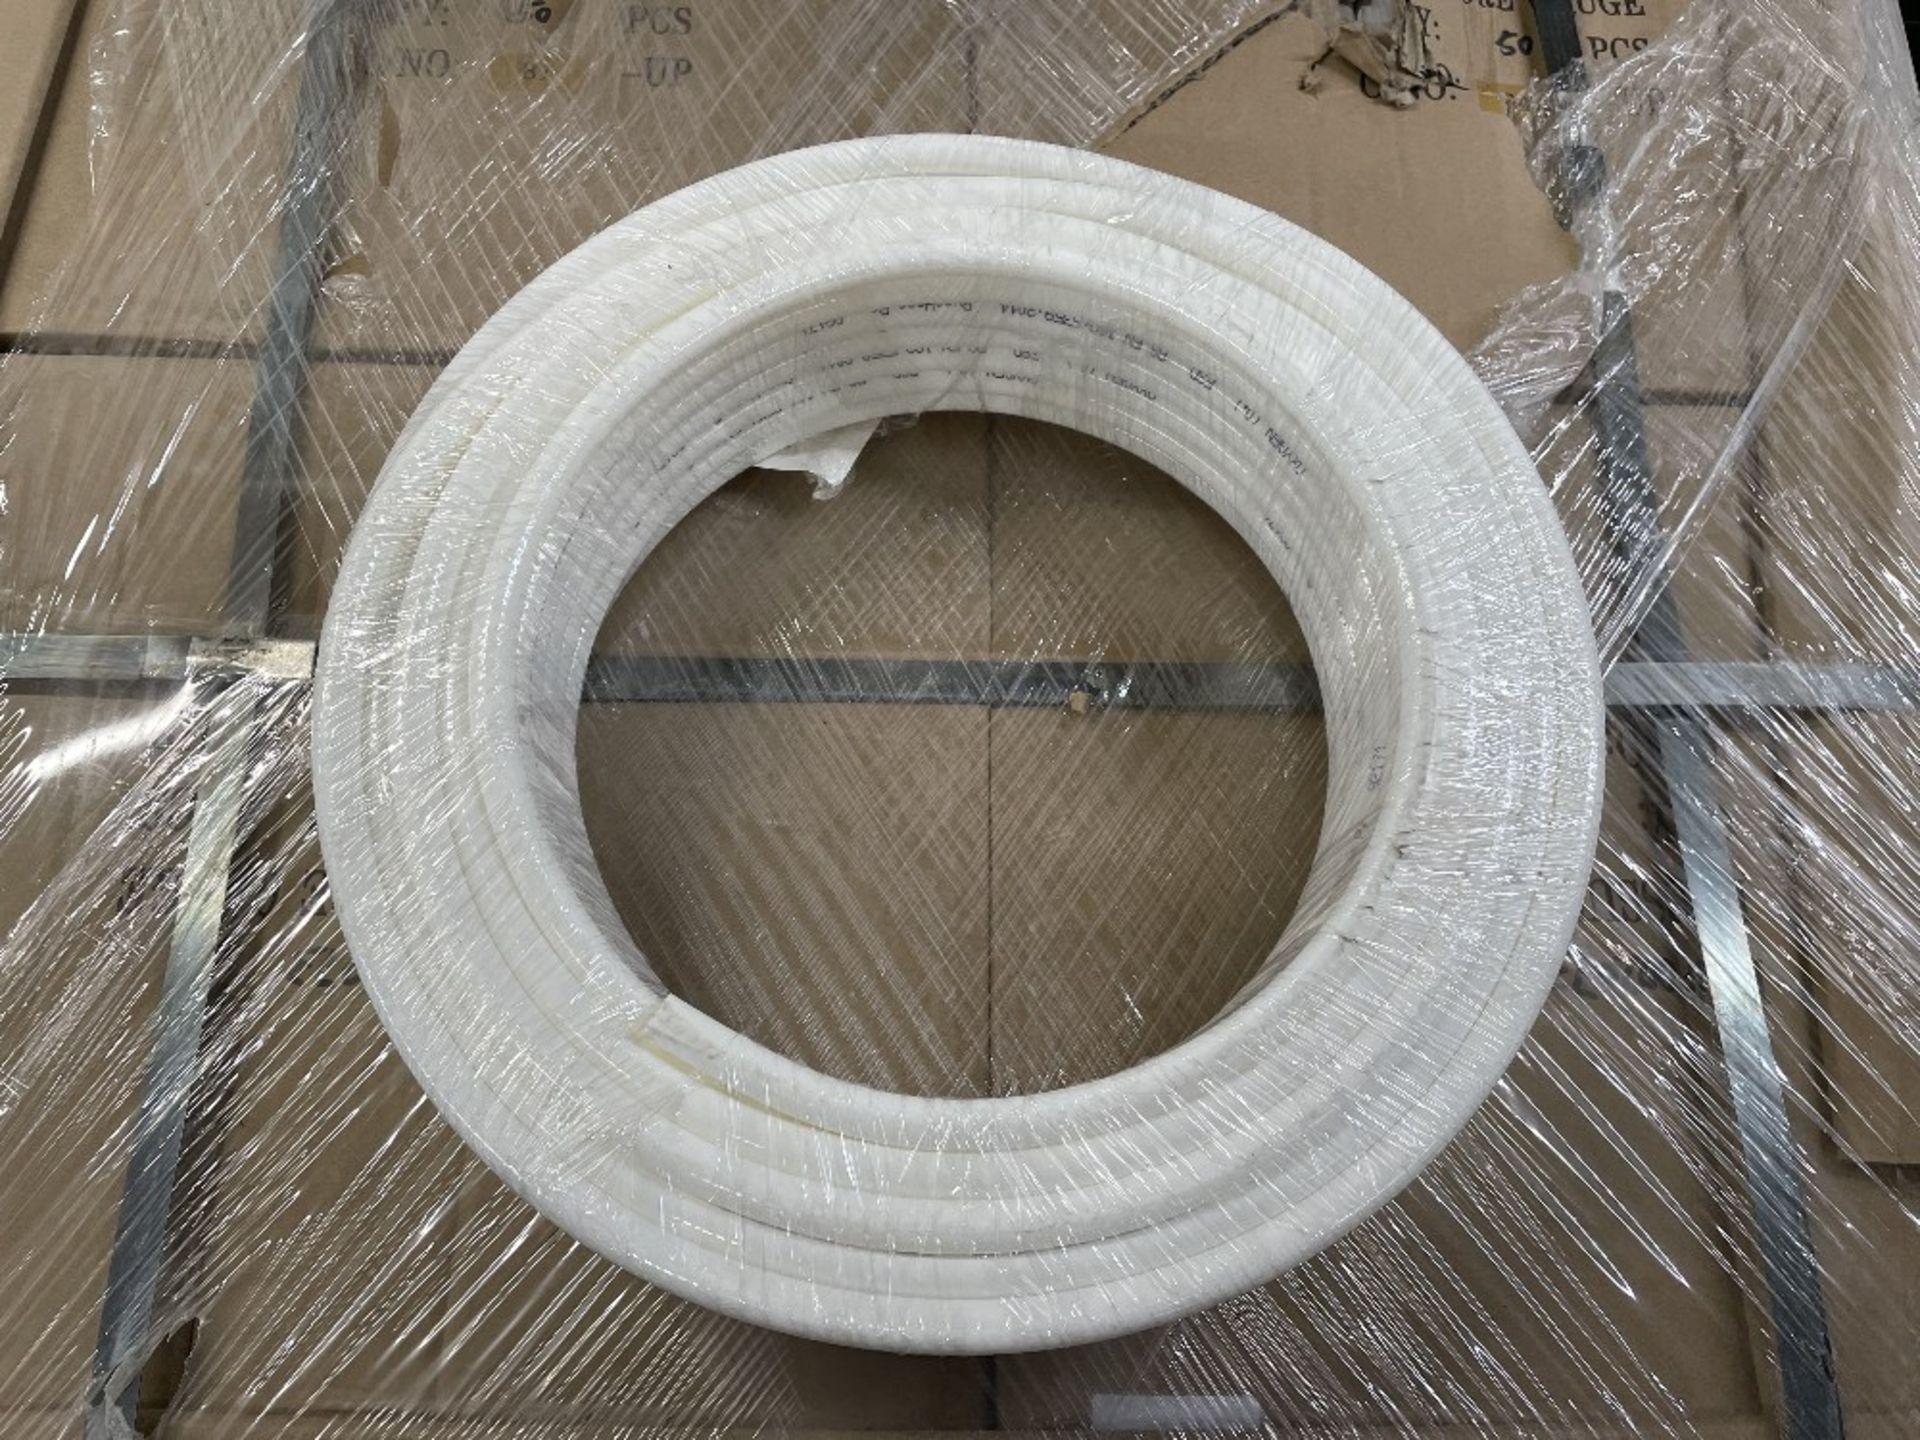 42 x Reels of MEDLINE003 108601PF O2 Tubing | 30m in length - Image 2 of 7